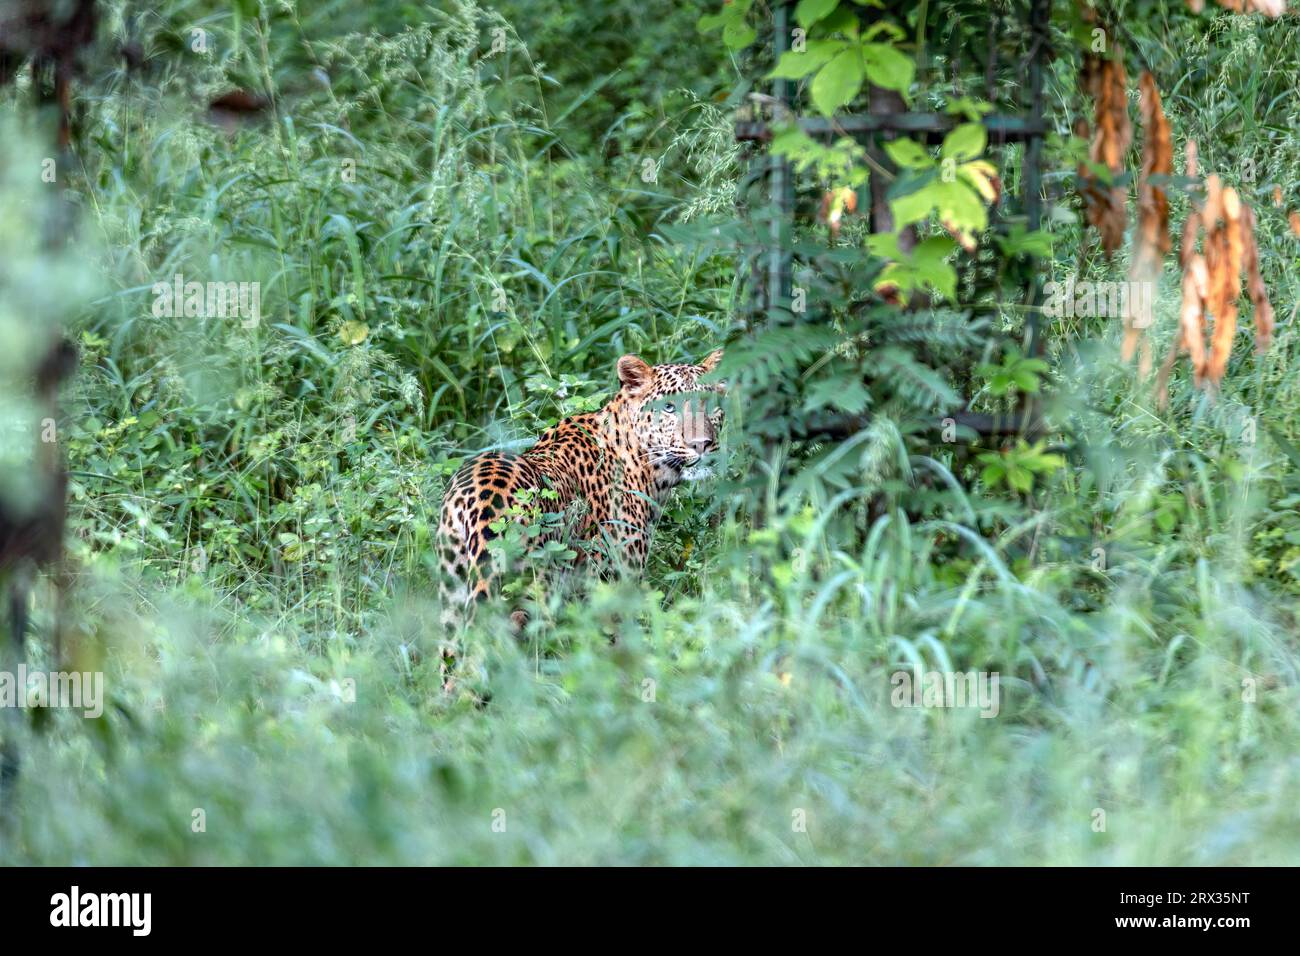 Spotted you - Leopard at Jhalana Leopard Reserve, Stock Photo